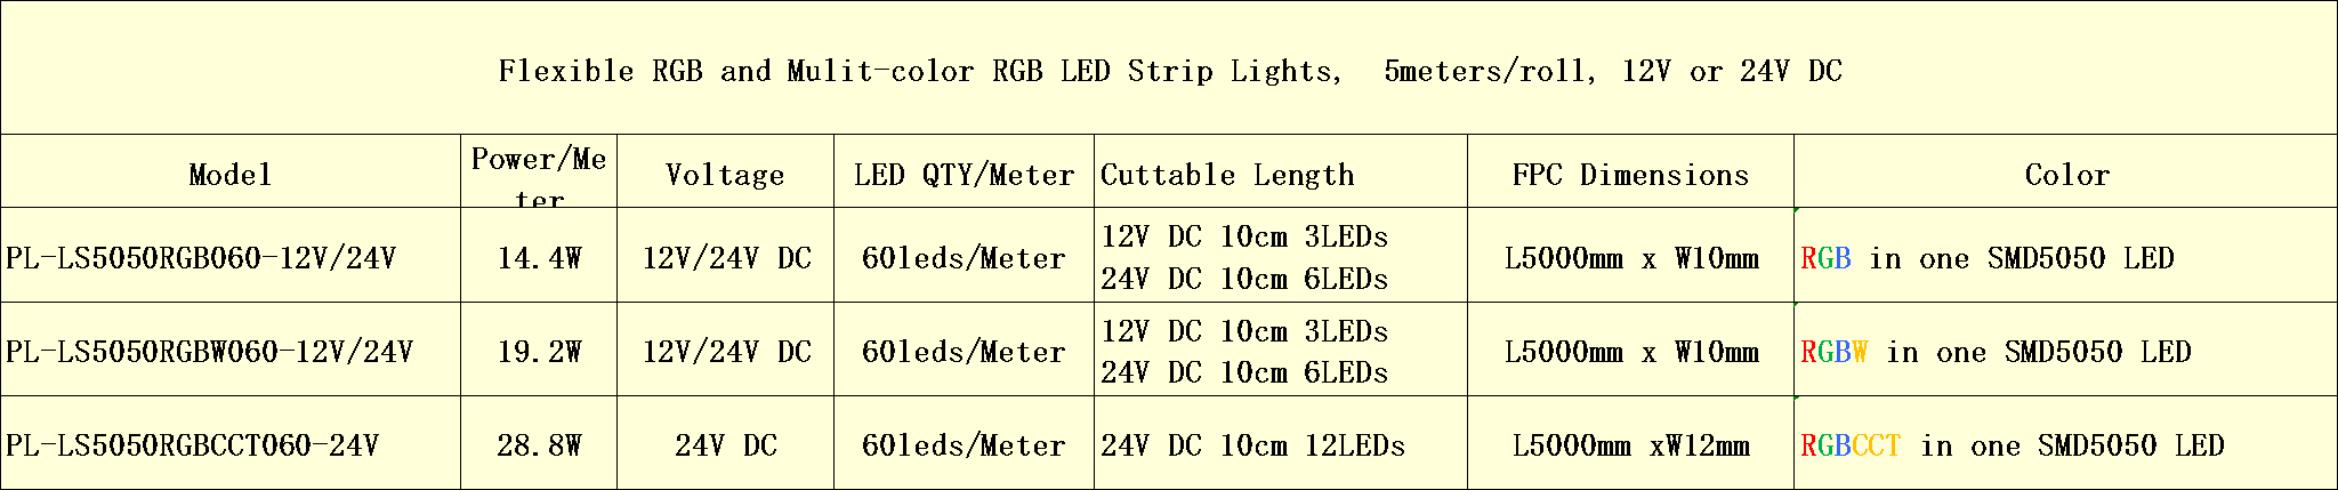 rgbw and rgb cct led strip lights